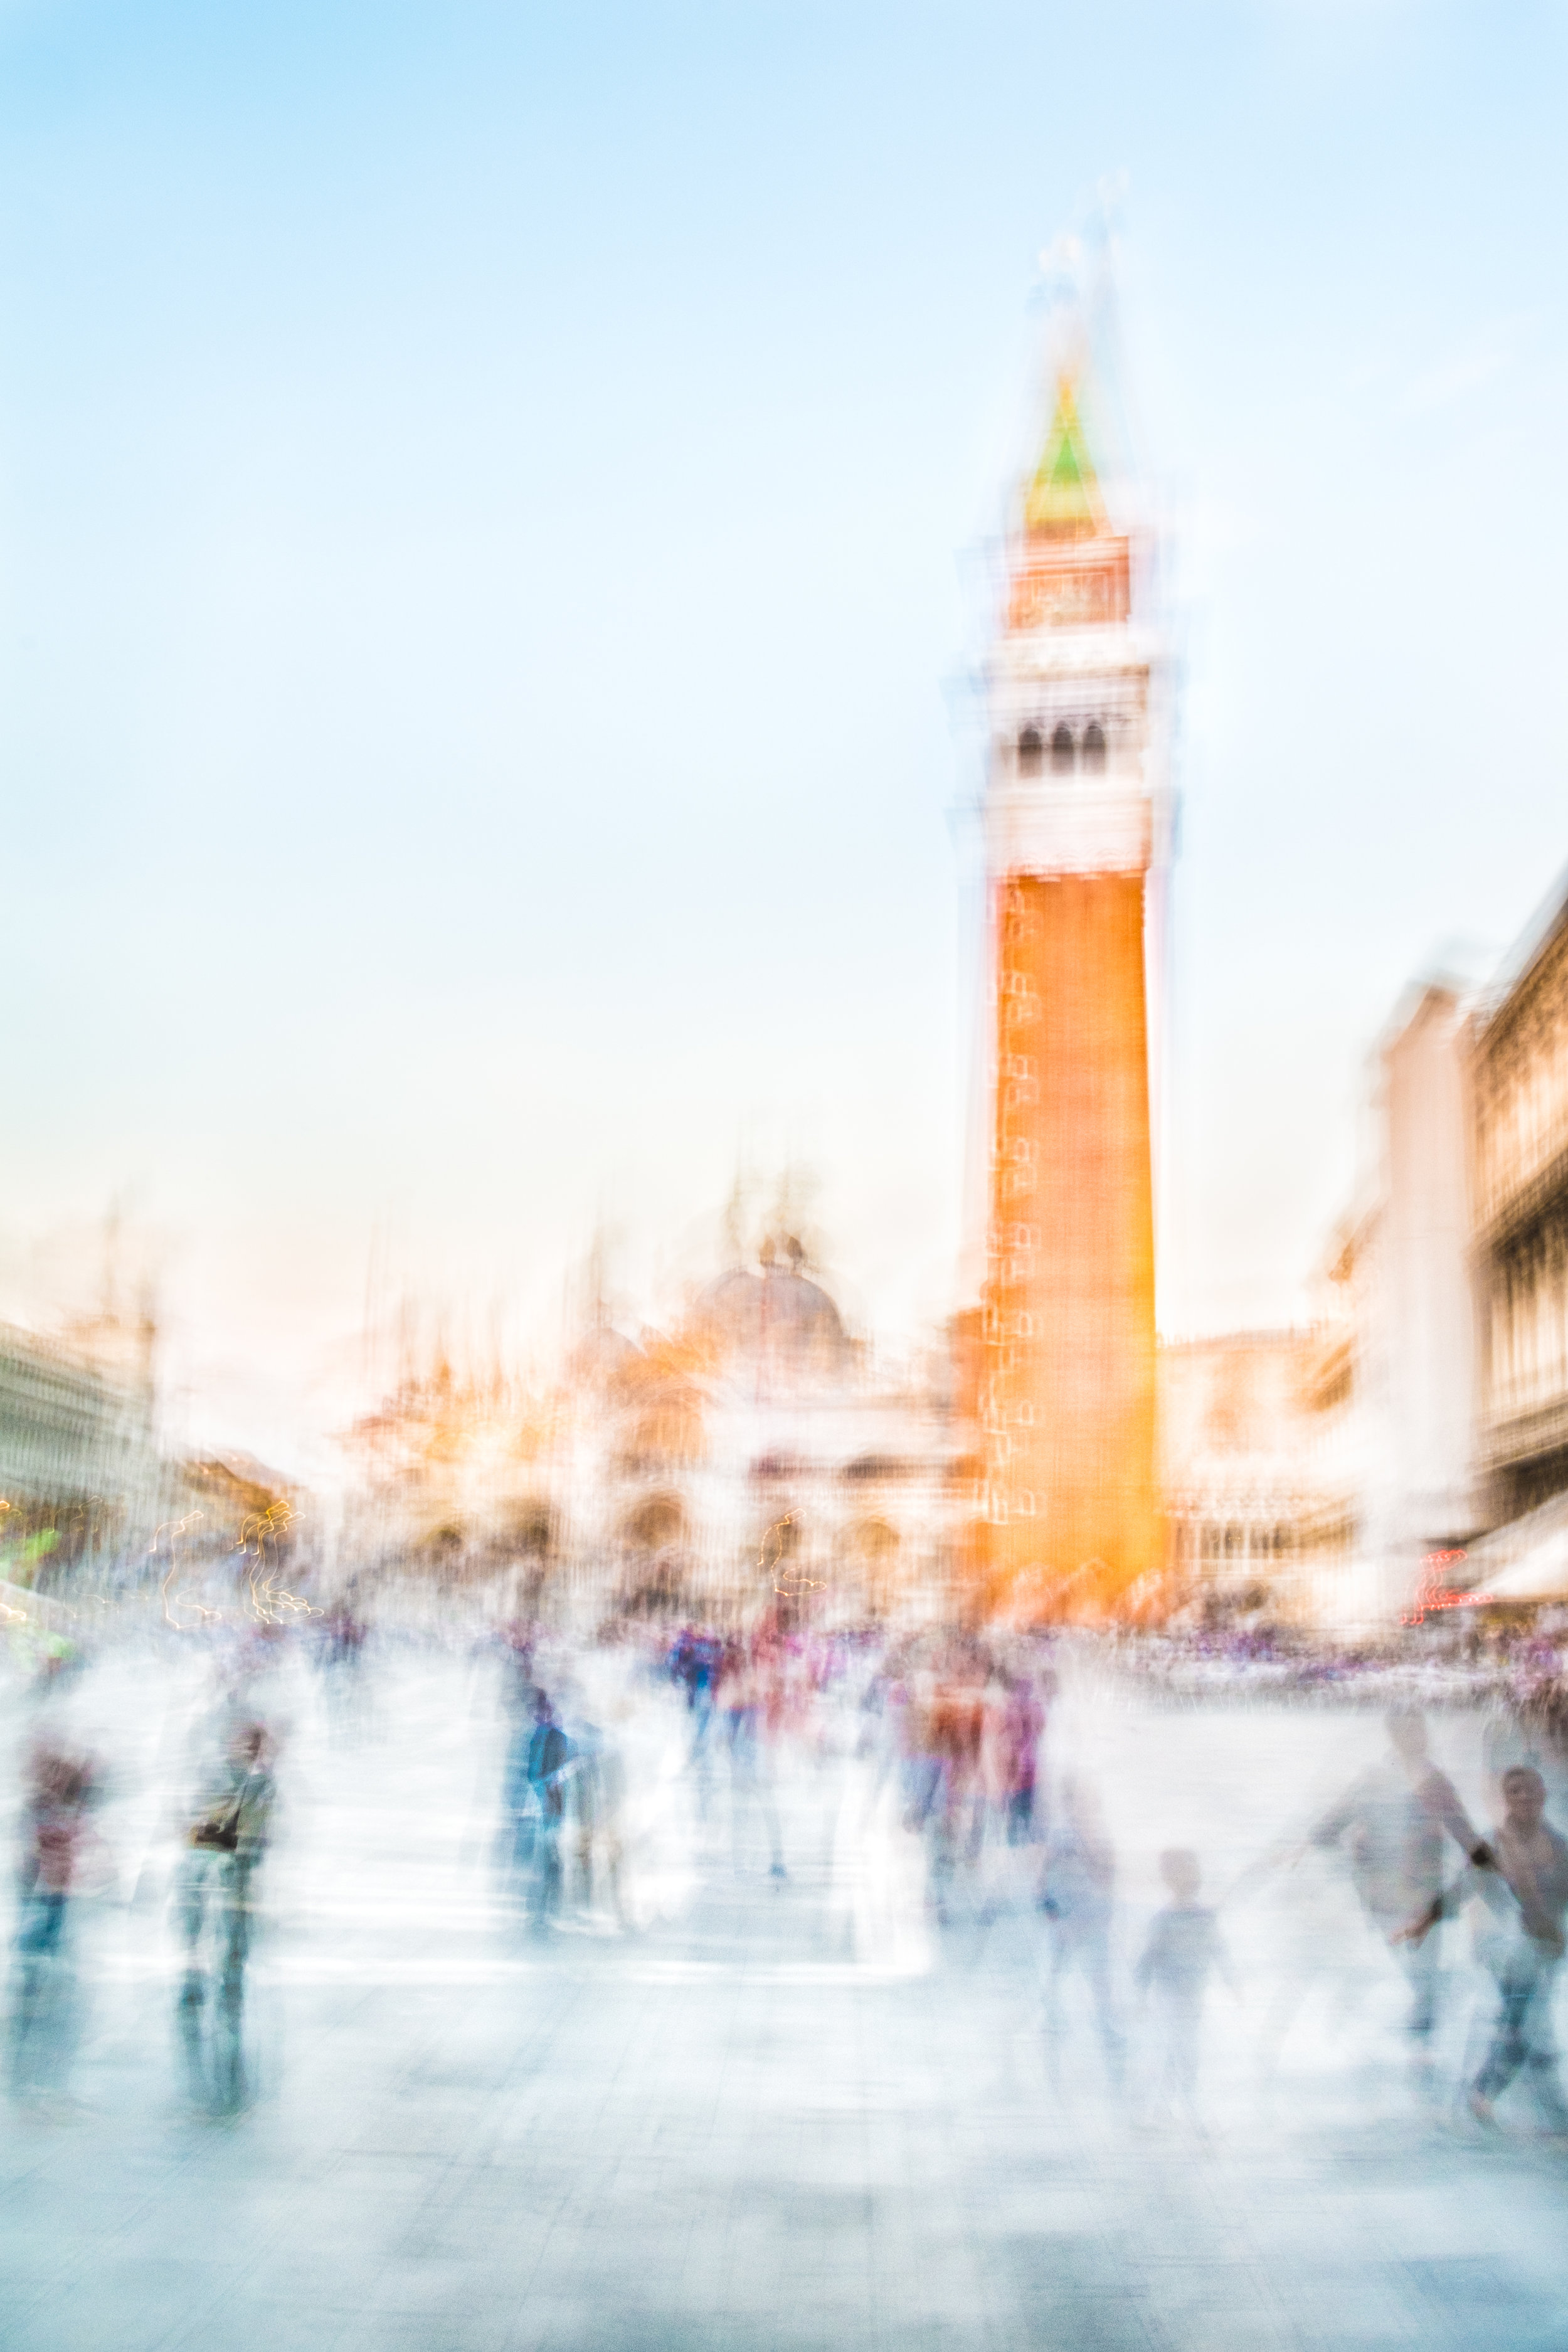 Venice - On San Marco square